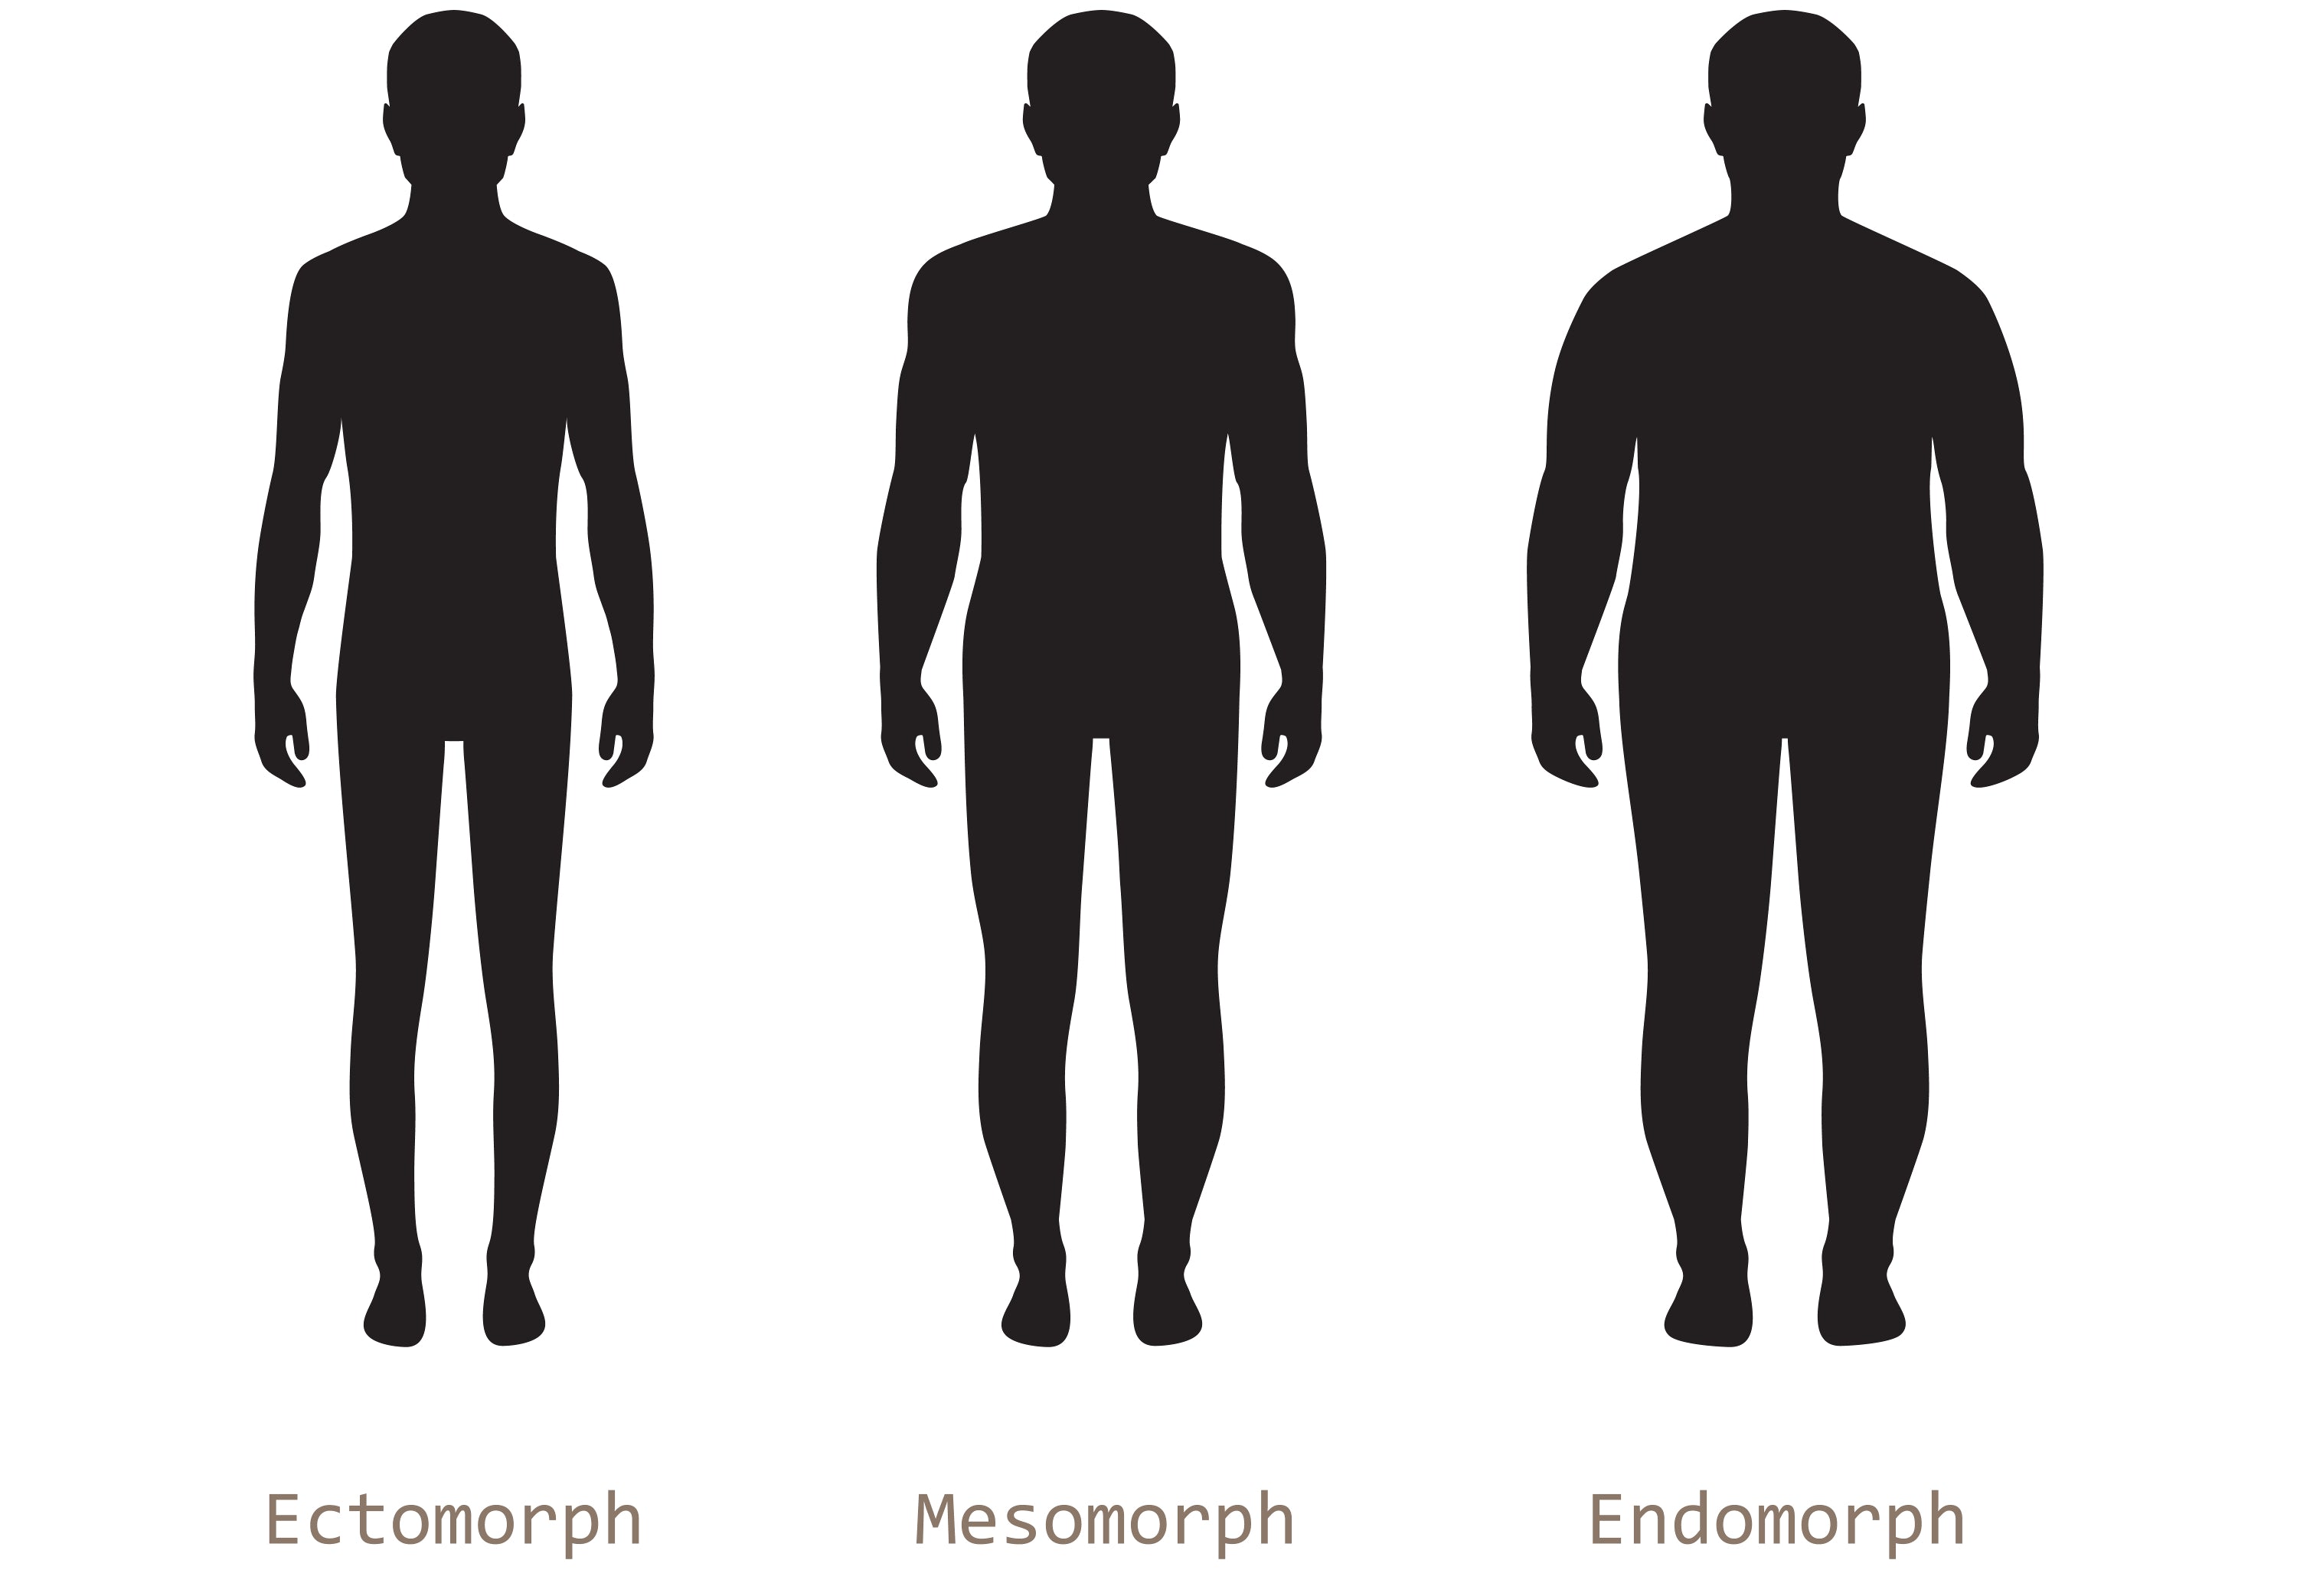 Are You an Endomorph, Mesomorph, or Ectomorph Body Type?